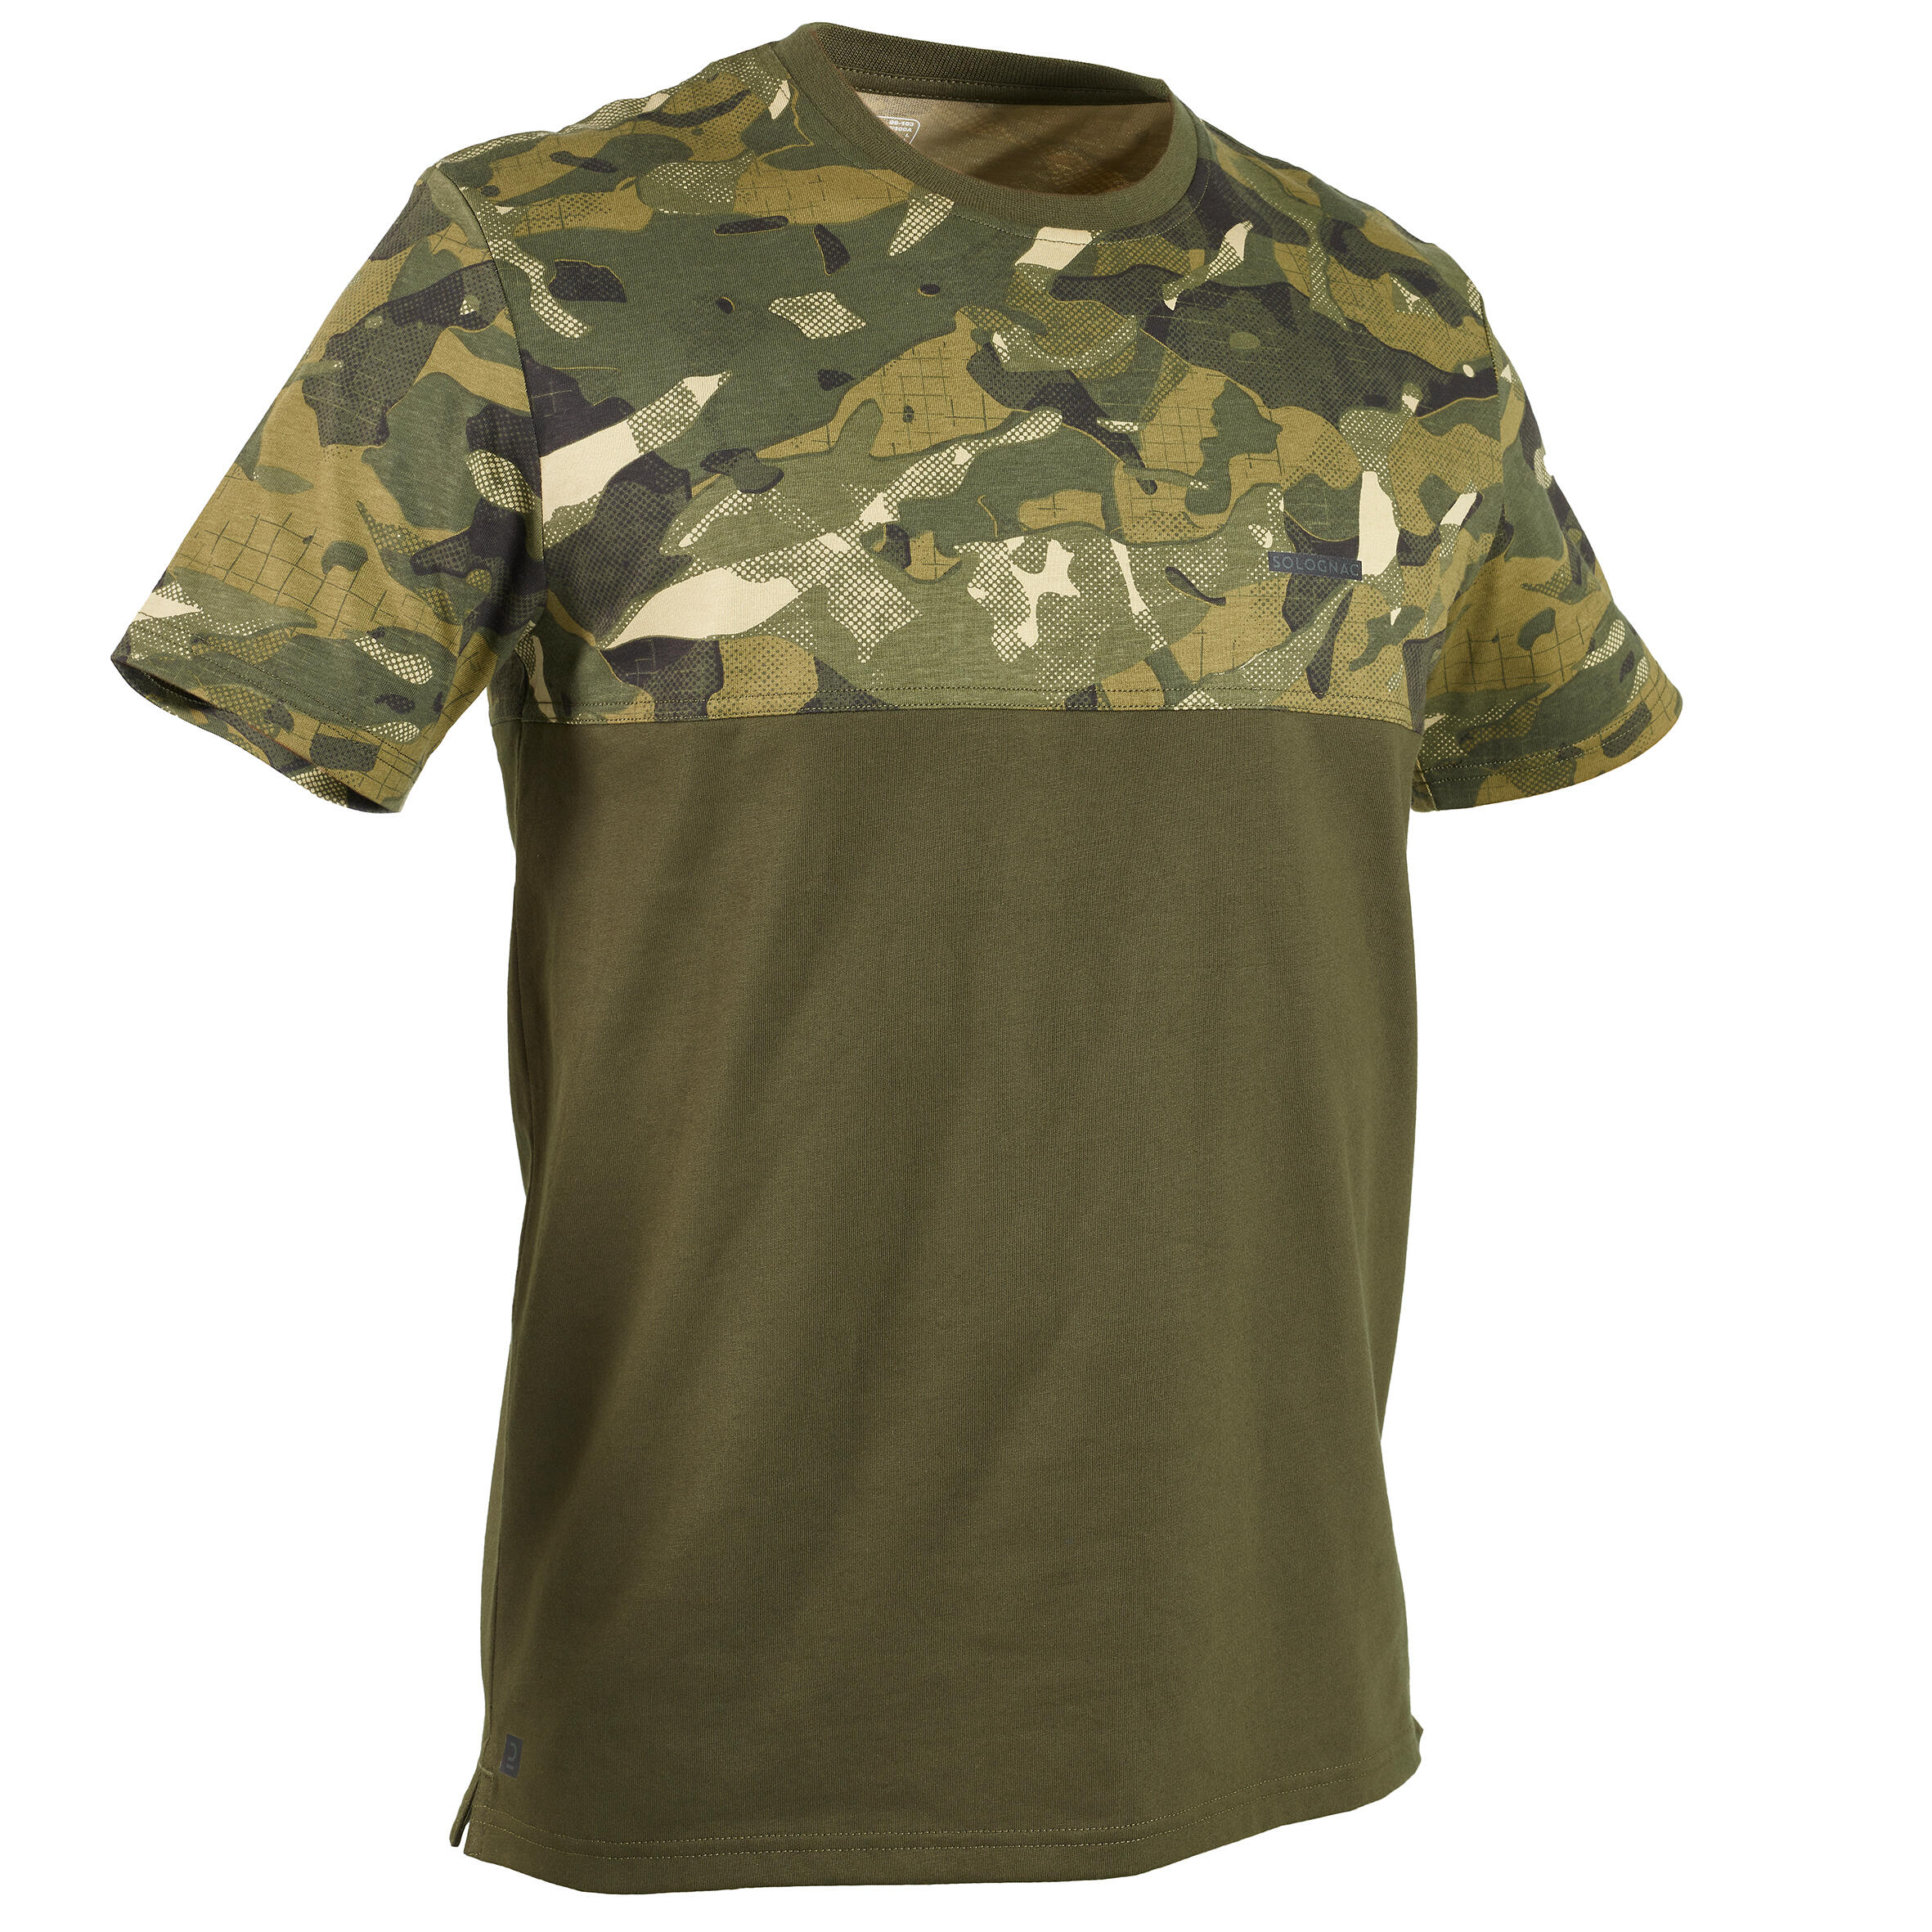 SOLOGNAC Men's Country Sport Short-Sleeved Resistant Cotton T-Shirt - 500 Woodland Camo/P